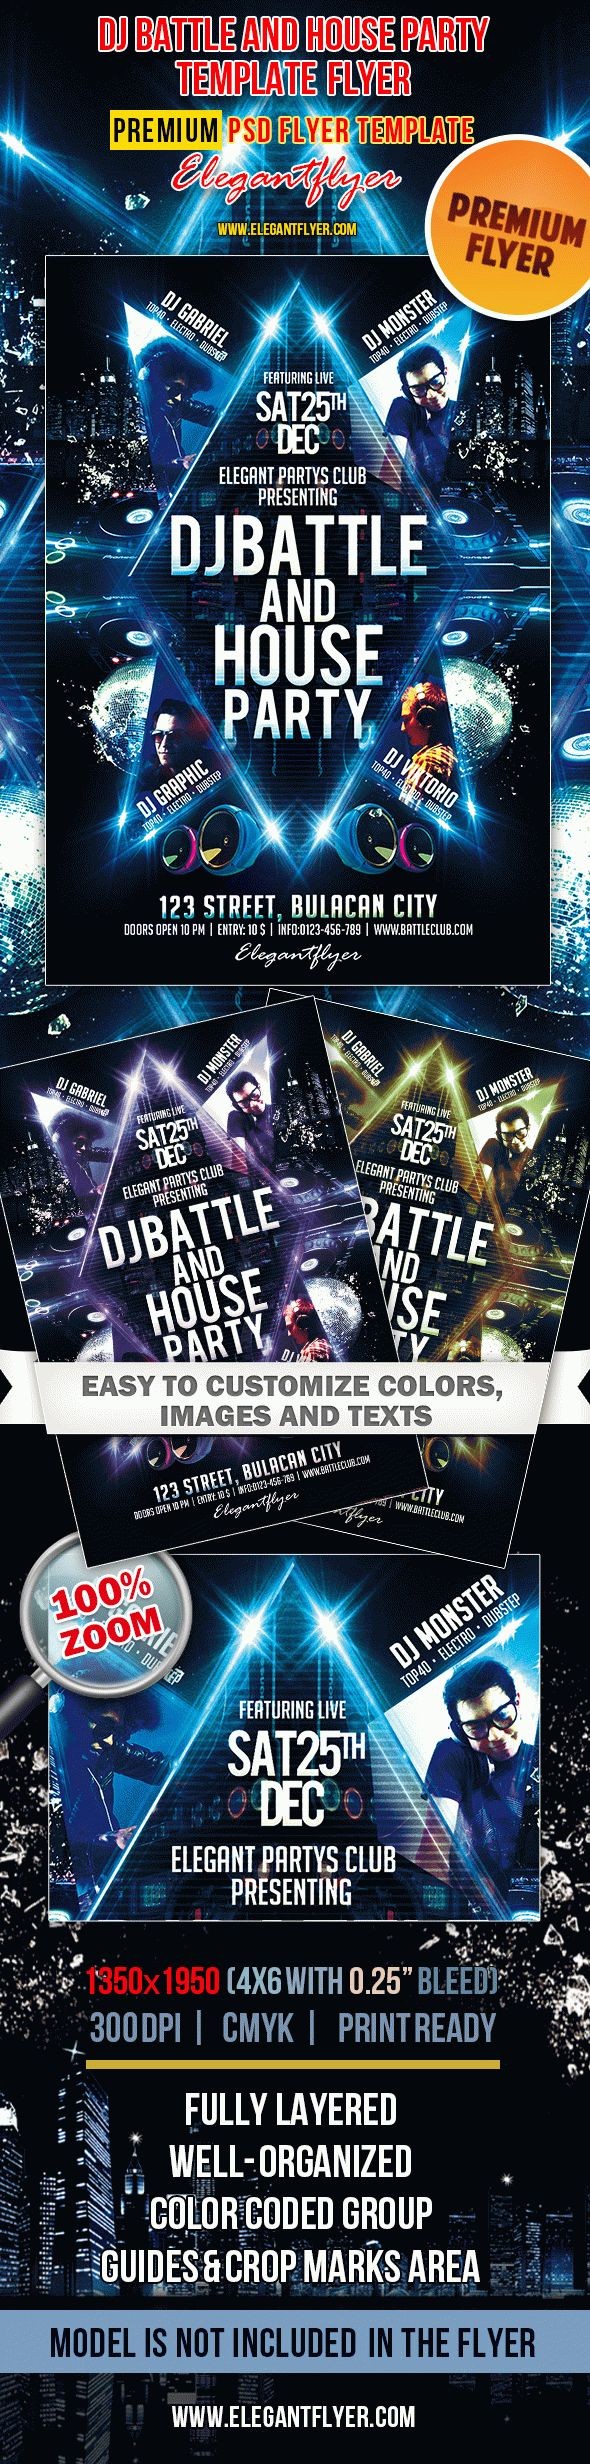 Dj Battle and House Party by ElegantFlyer